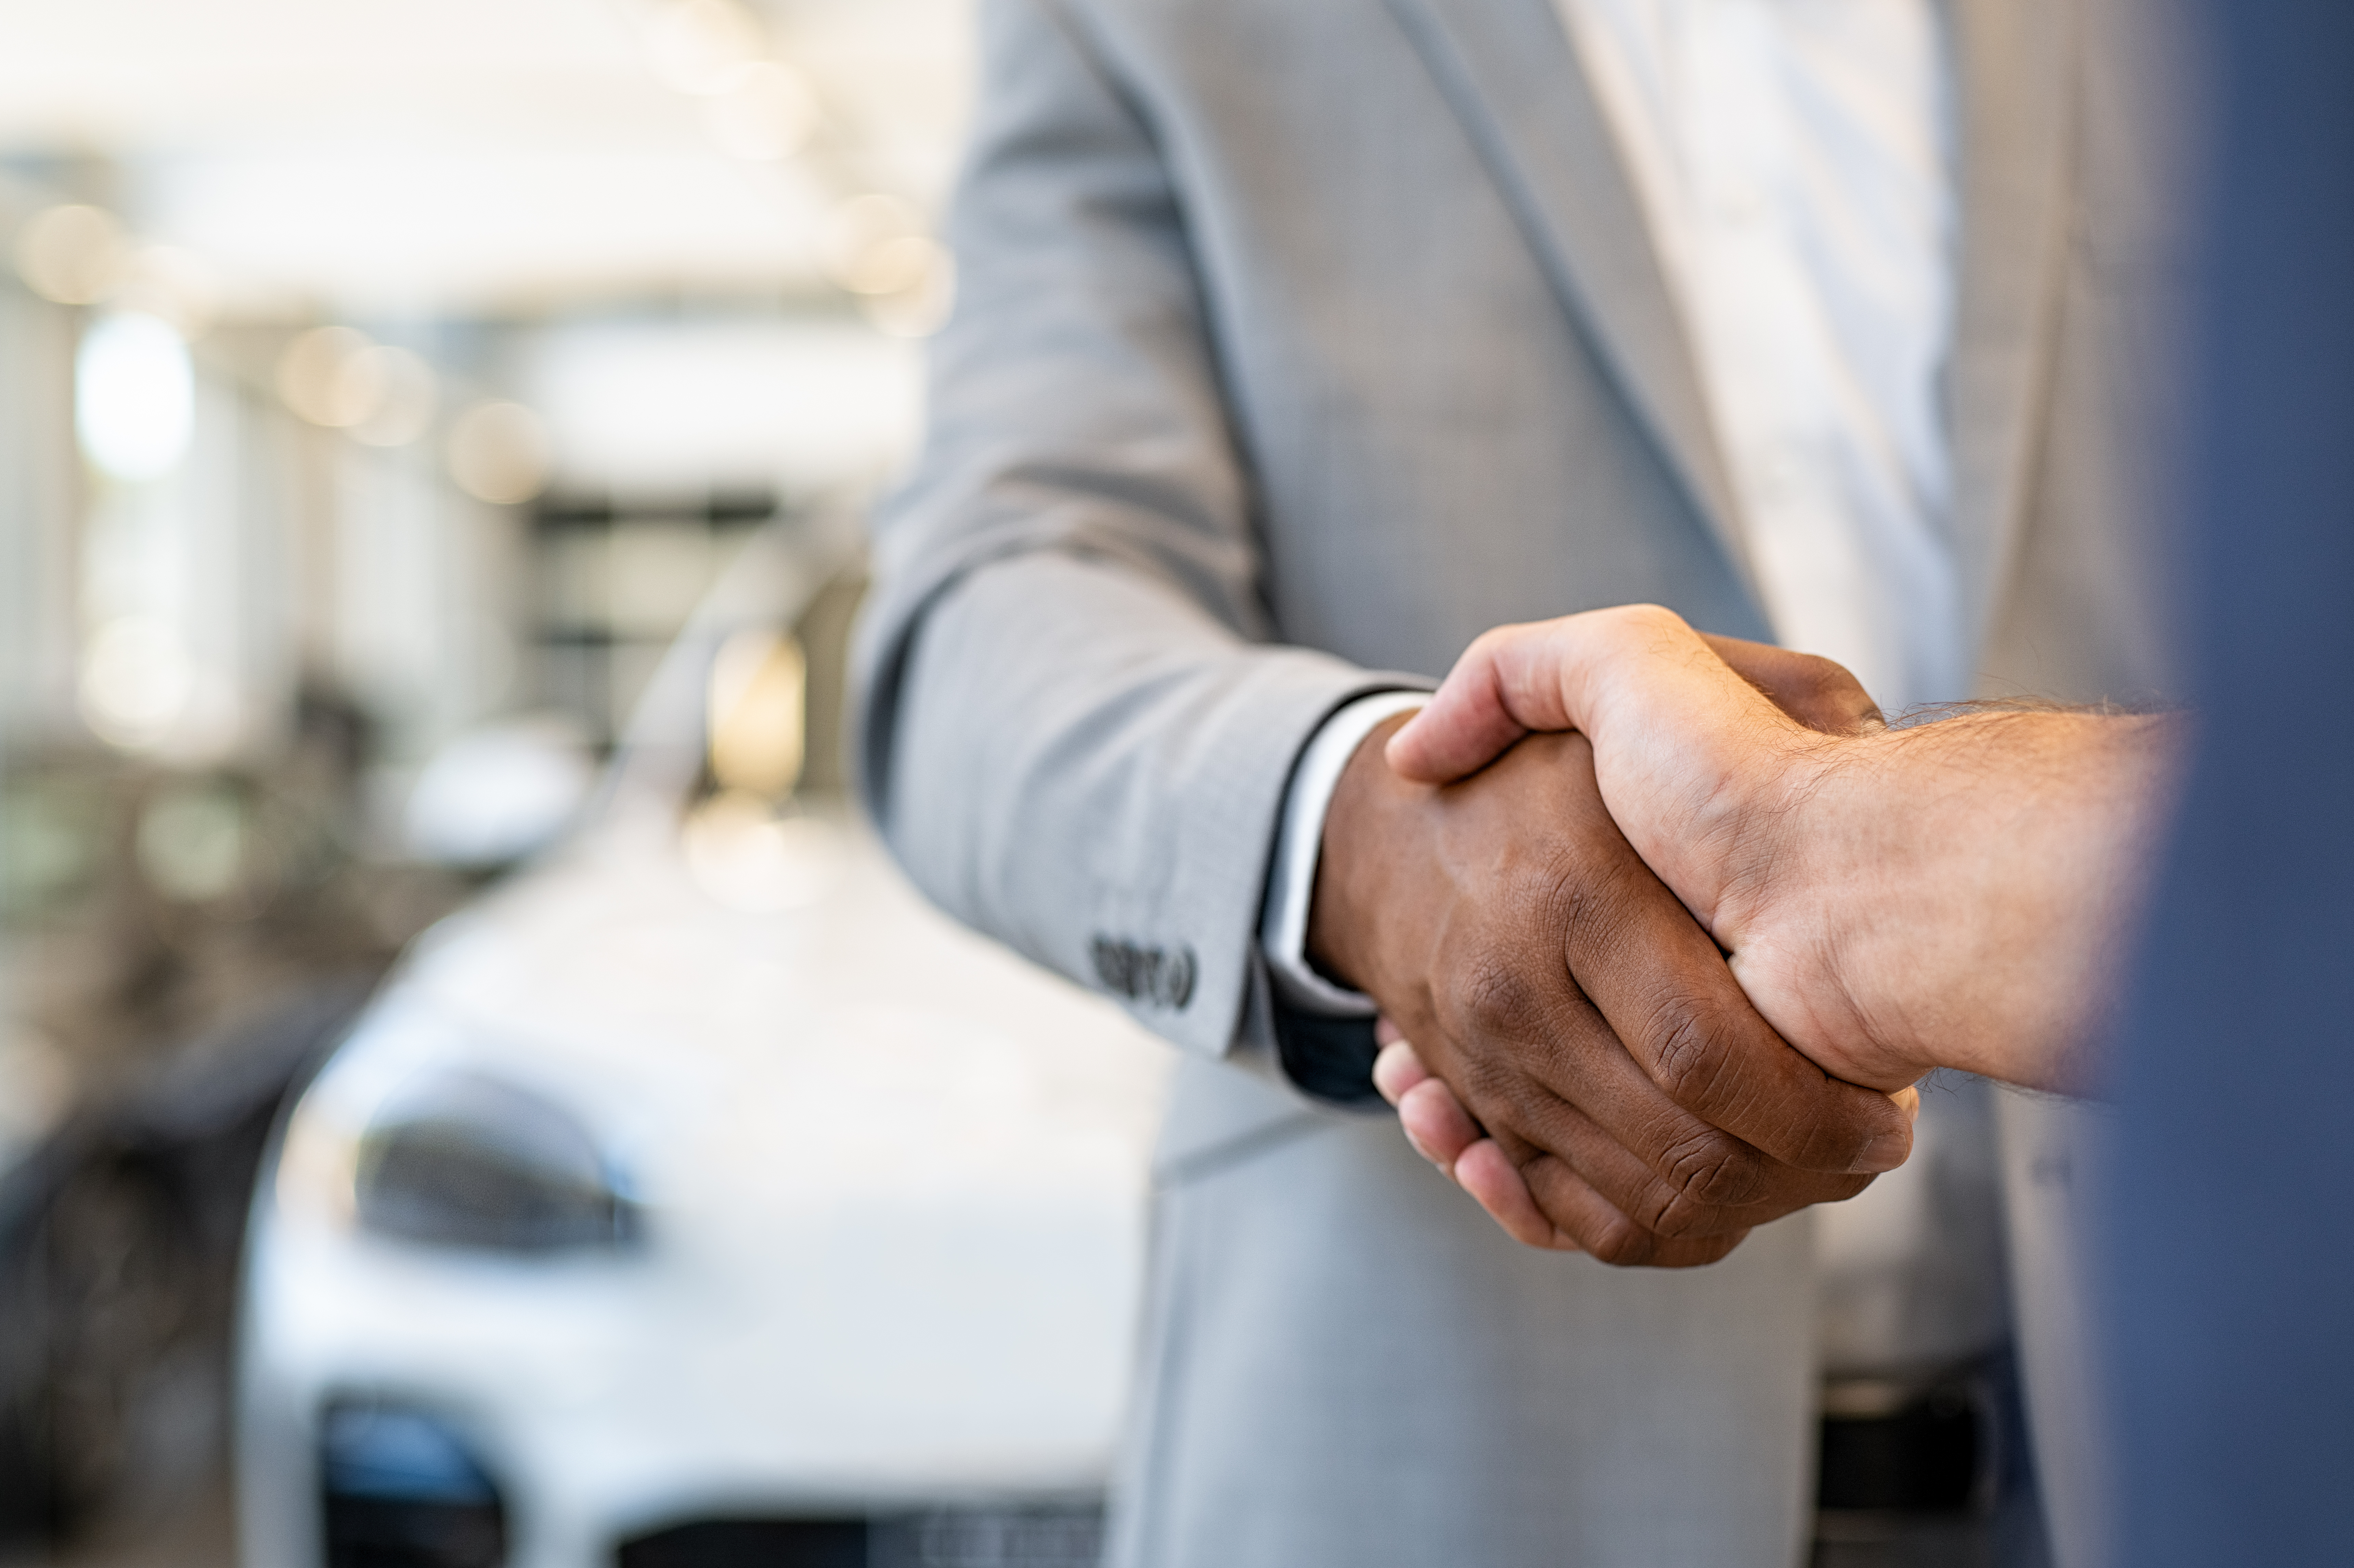  Car salesman and client handshake